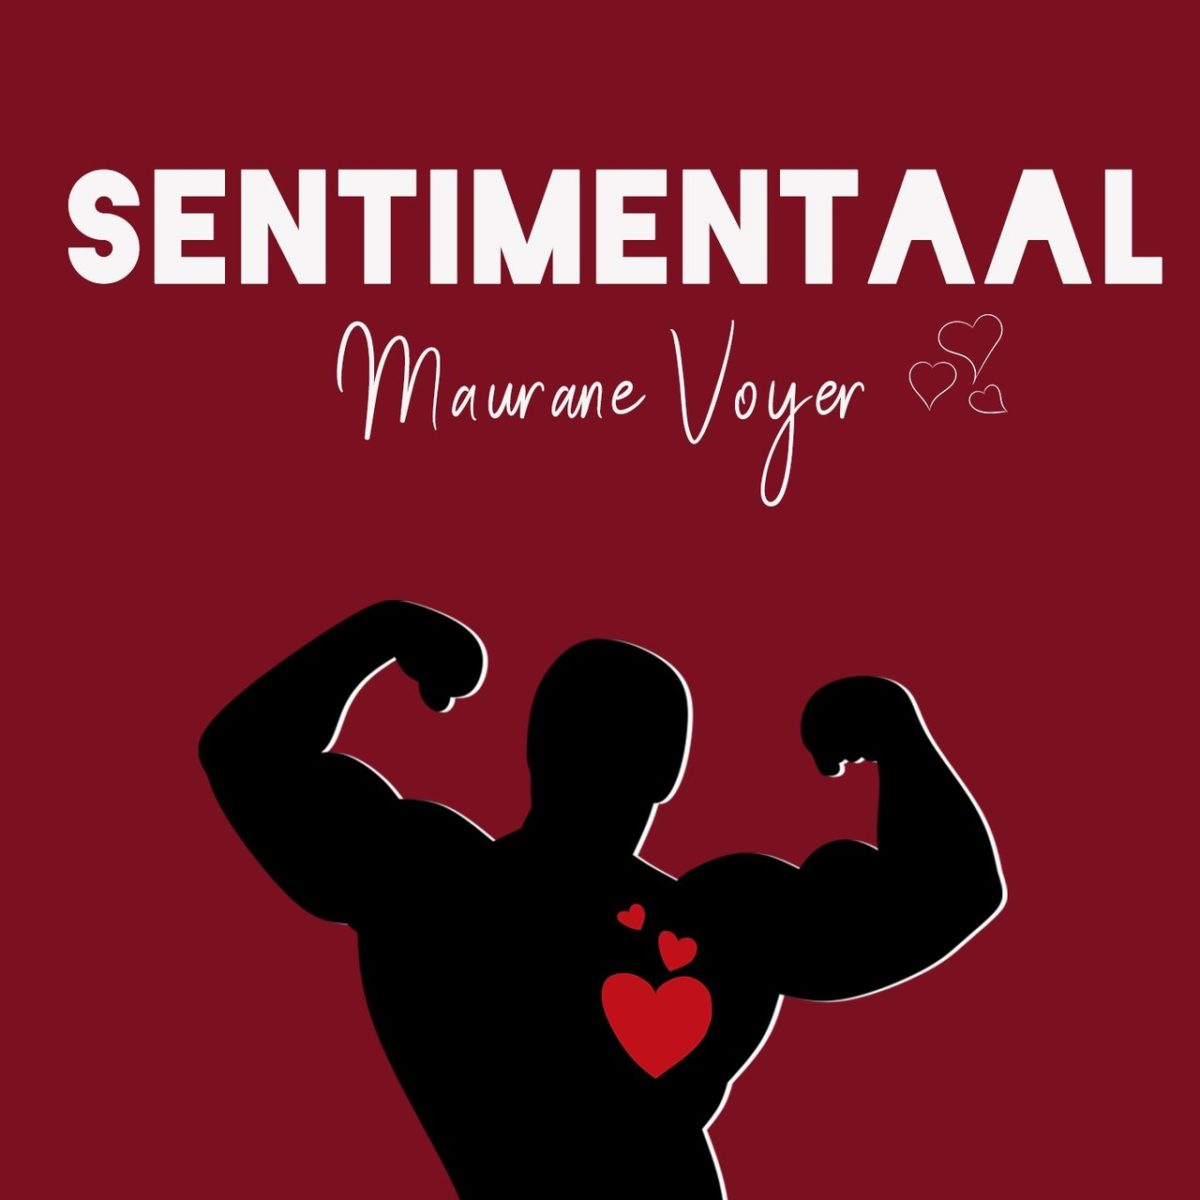 Maurane Voyer - Sentimentaal (Cover)